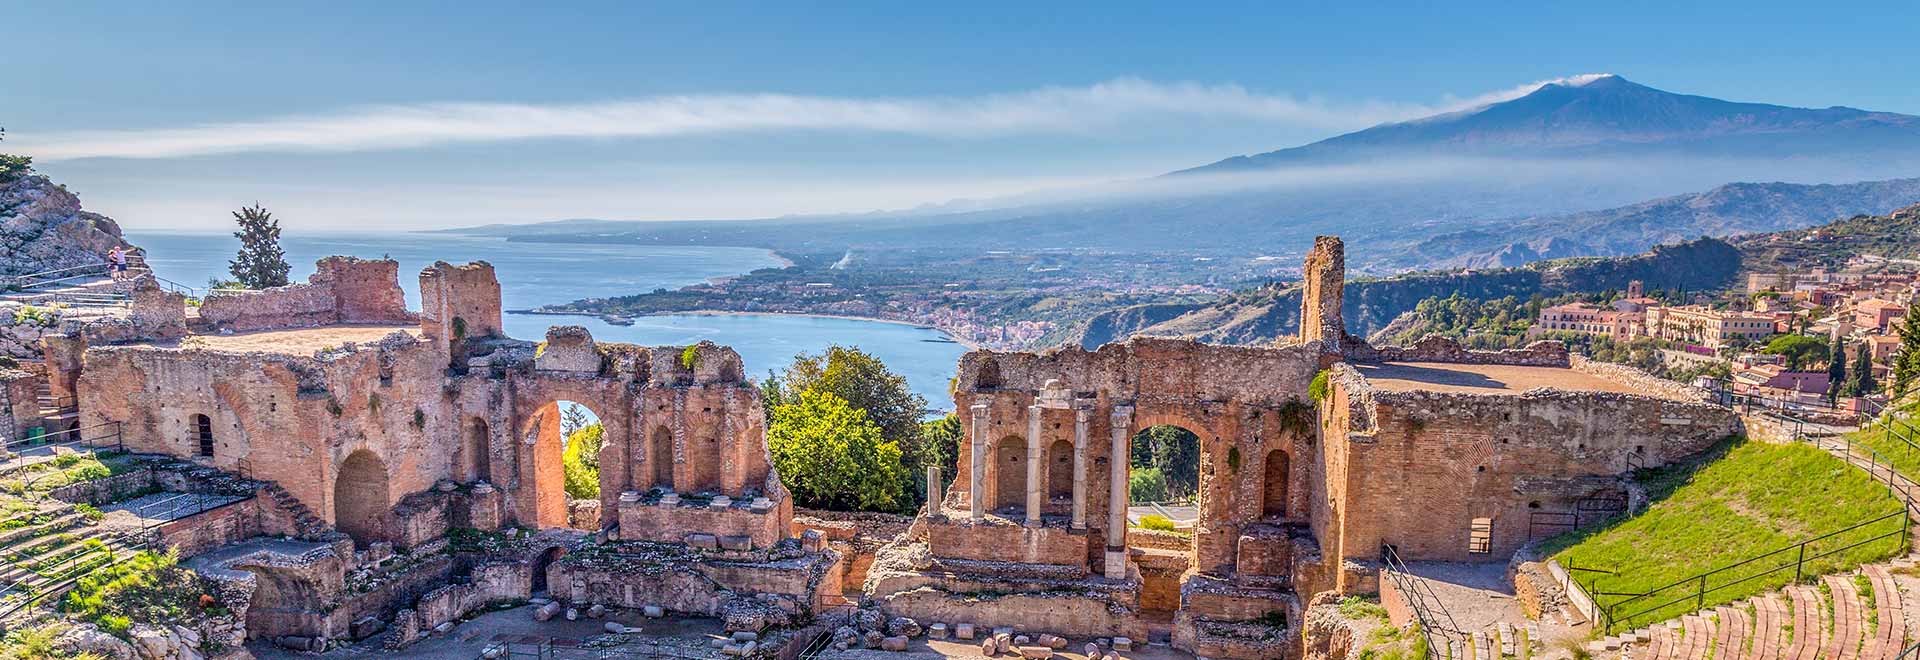 Europe Italy Sicily Cruise Hidden Treasures MH